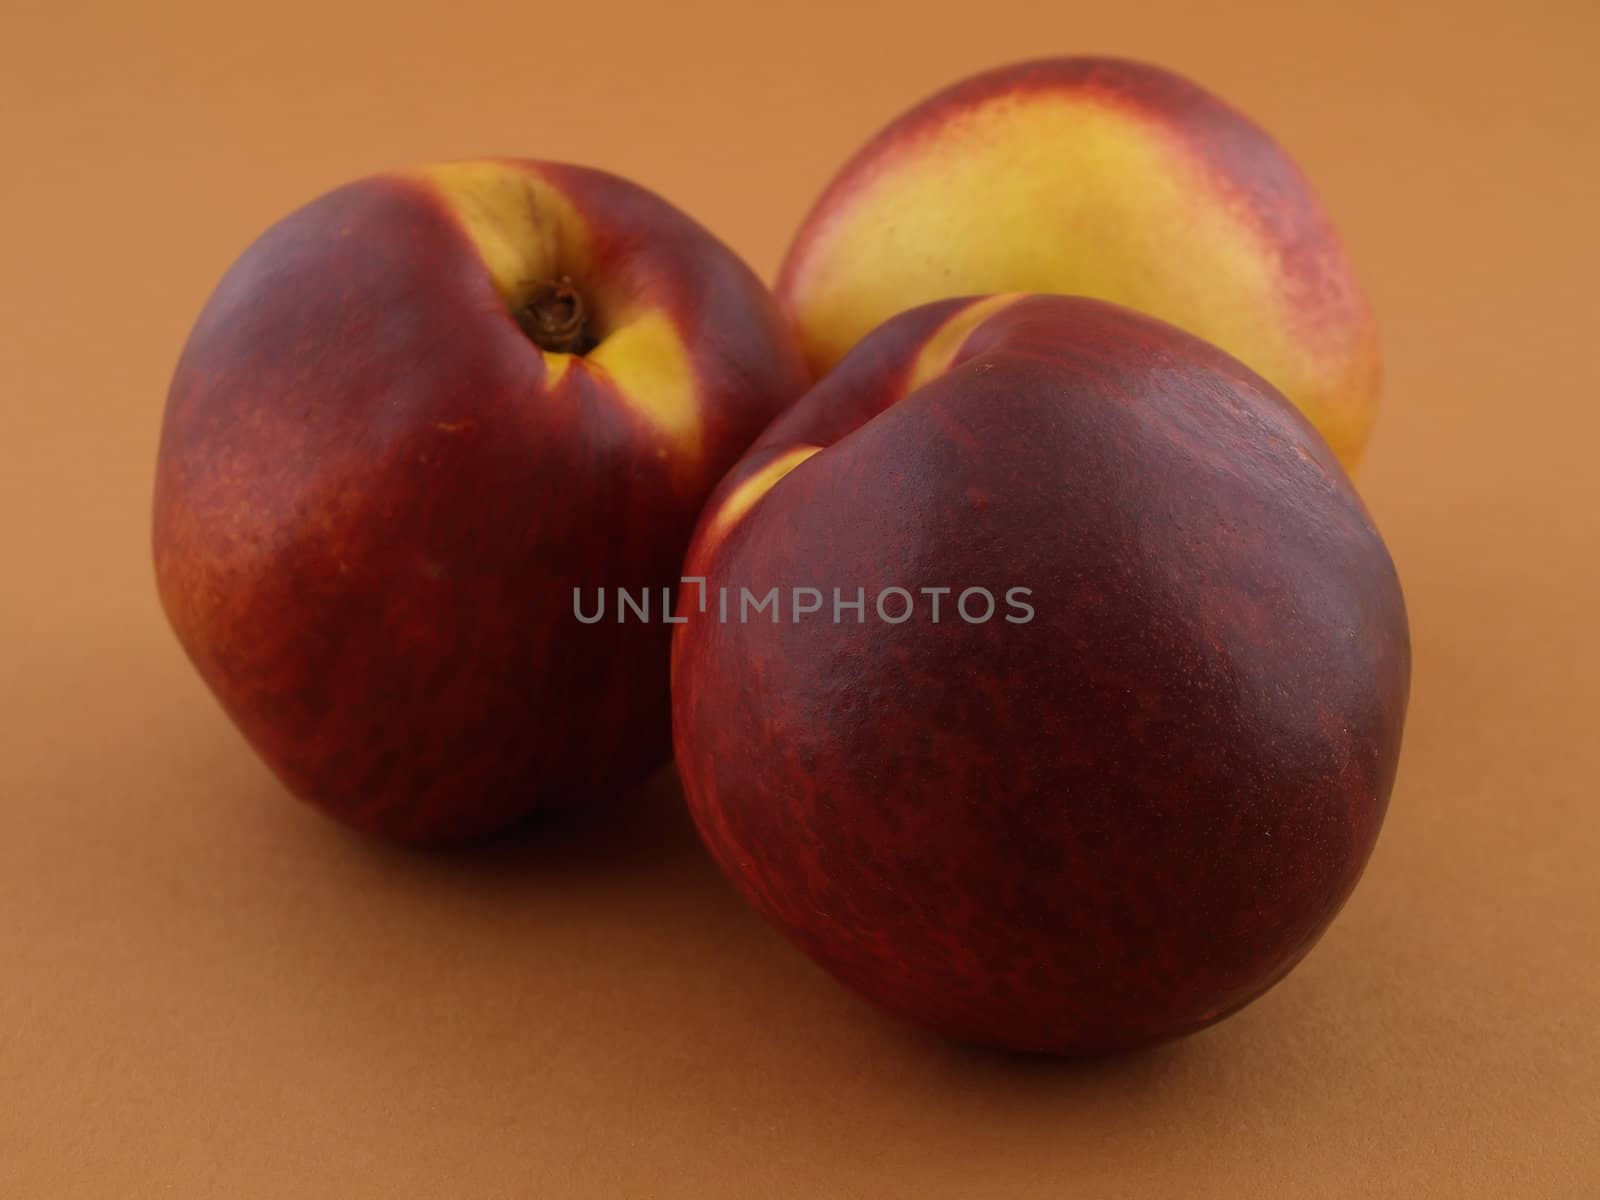 Three ripe peaches on a tan colored background.